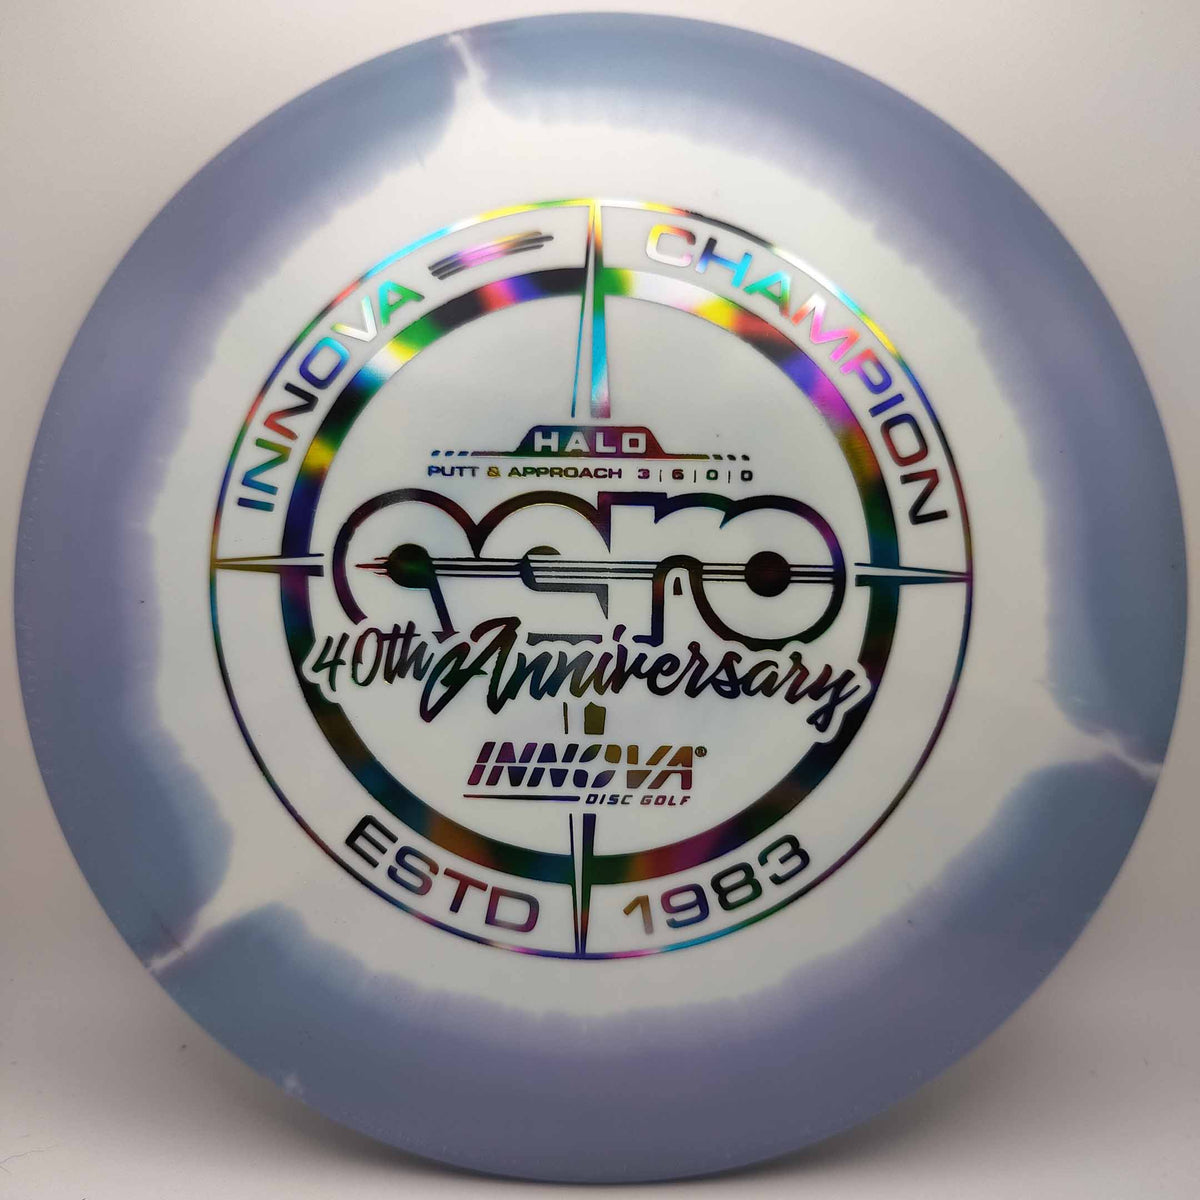 Innova Aero - Halo Star 40th Anniversary